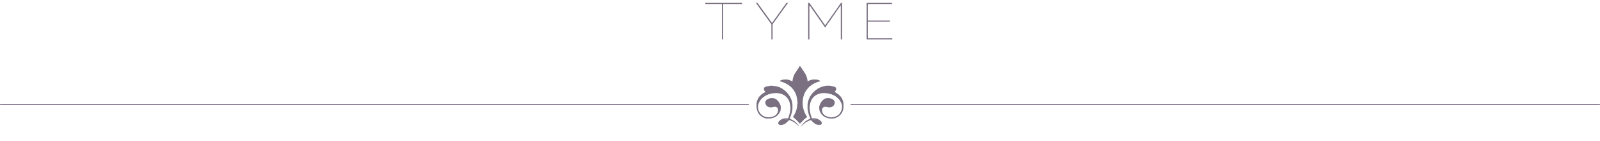 TYME logo in purple text